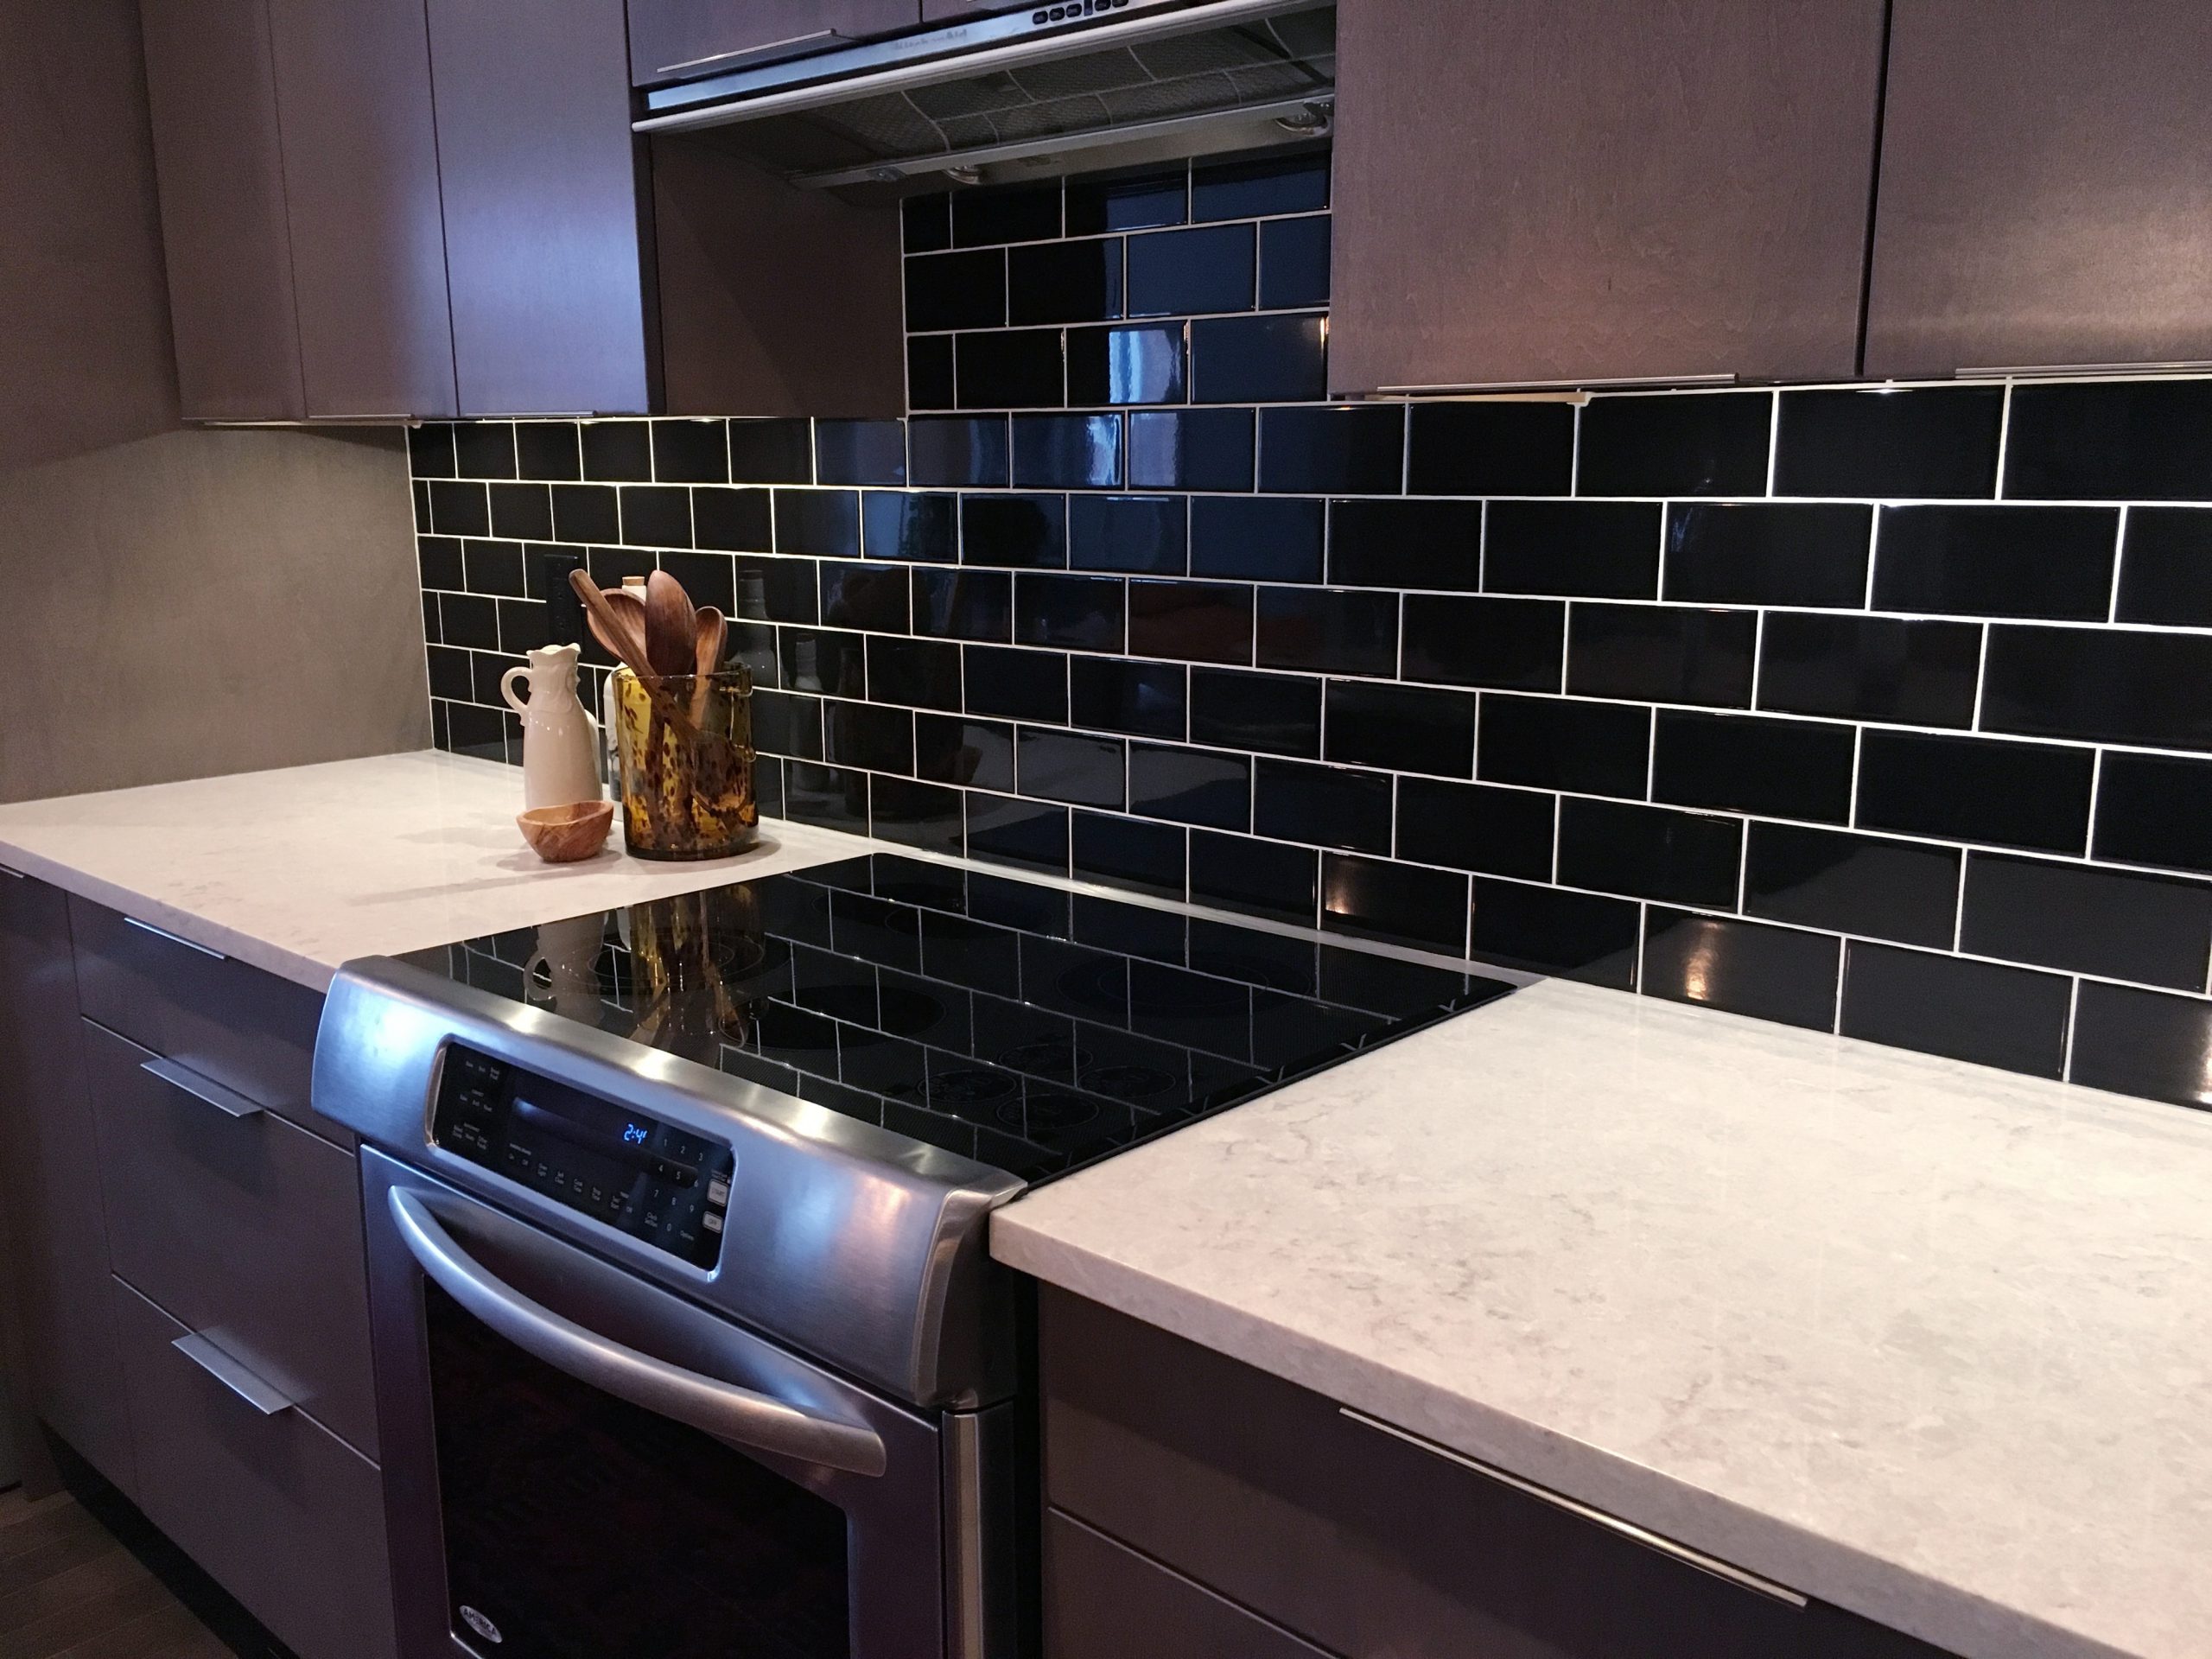 Modern Kitchen In Dark Tones With Black Tiled Wall 2022 11 15 20 54 09 Utc